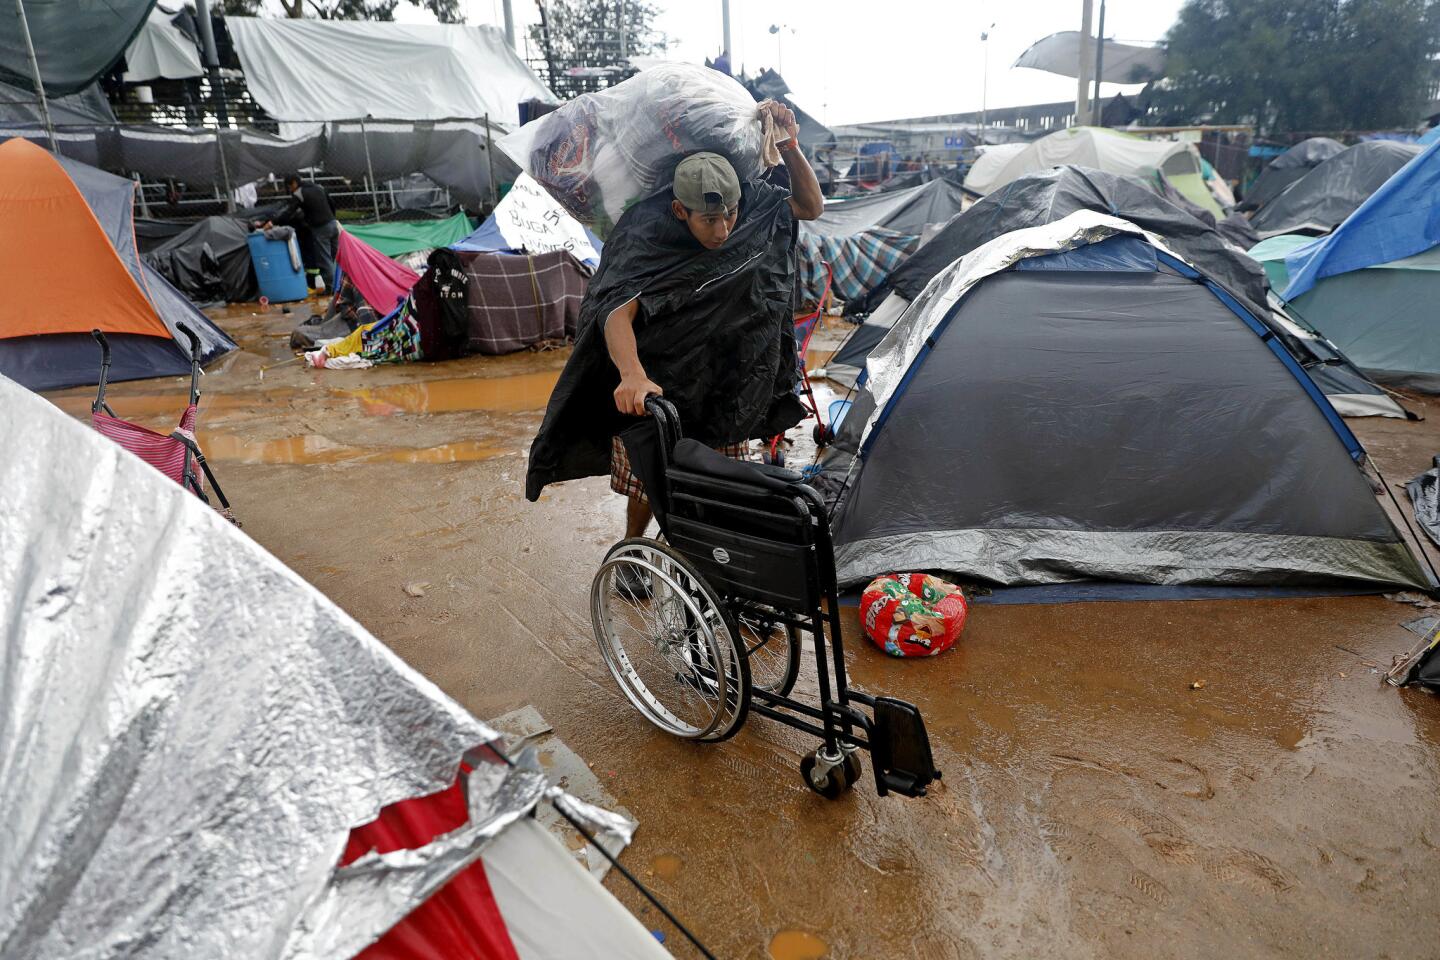 Rain drenches Tijuana migrant camp